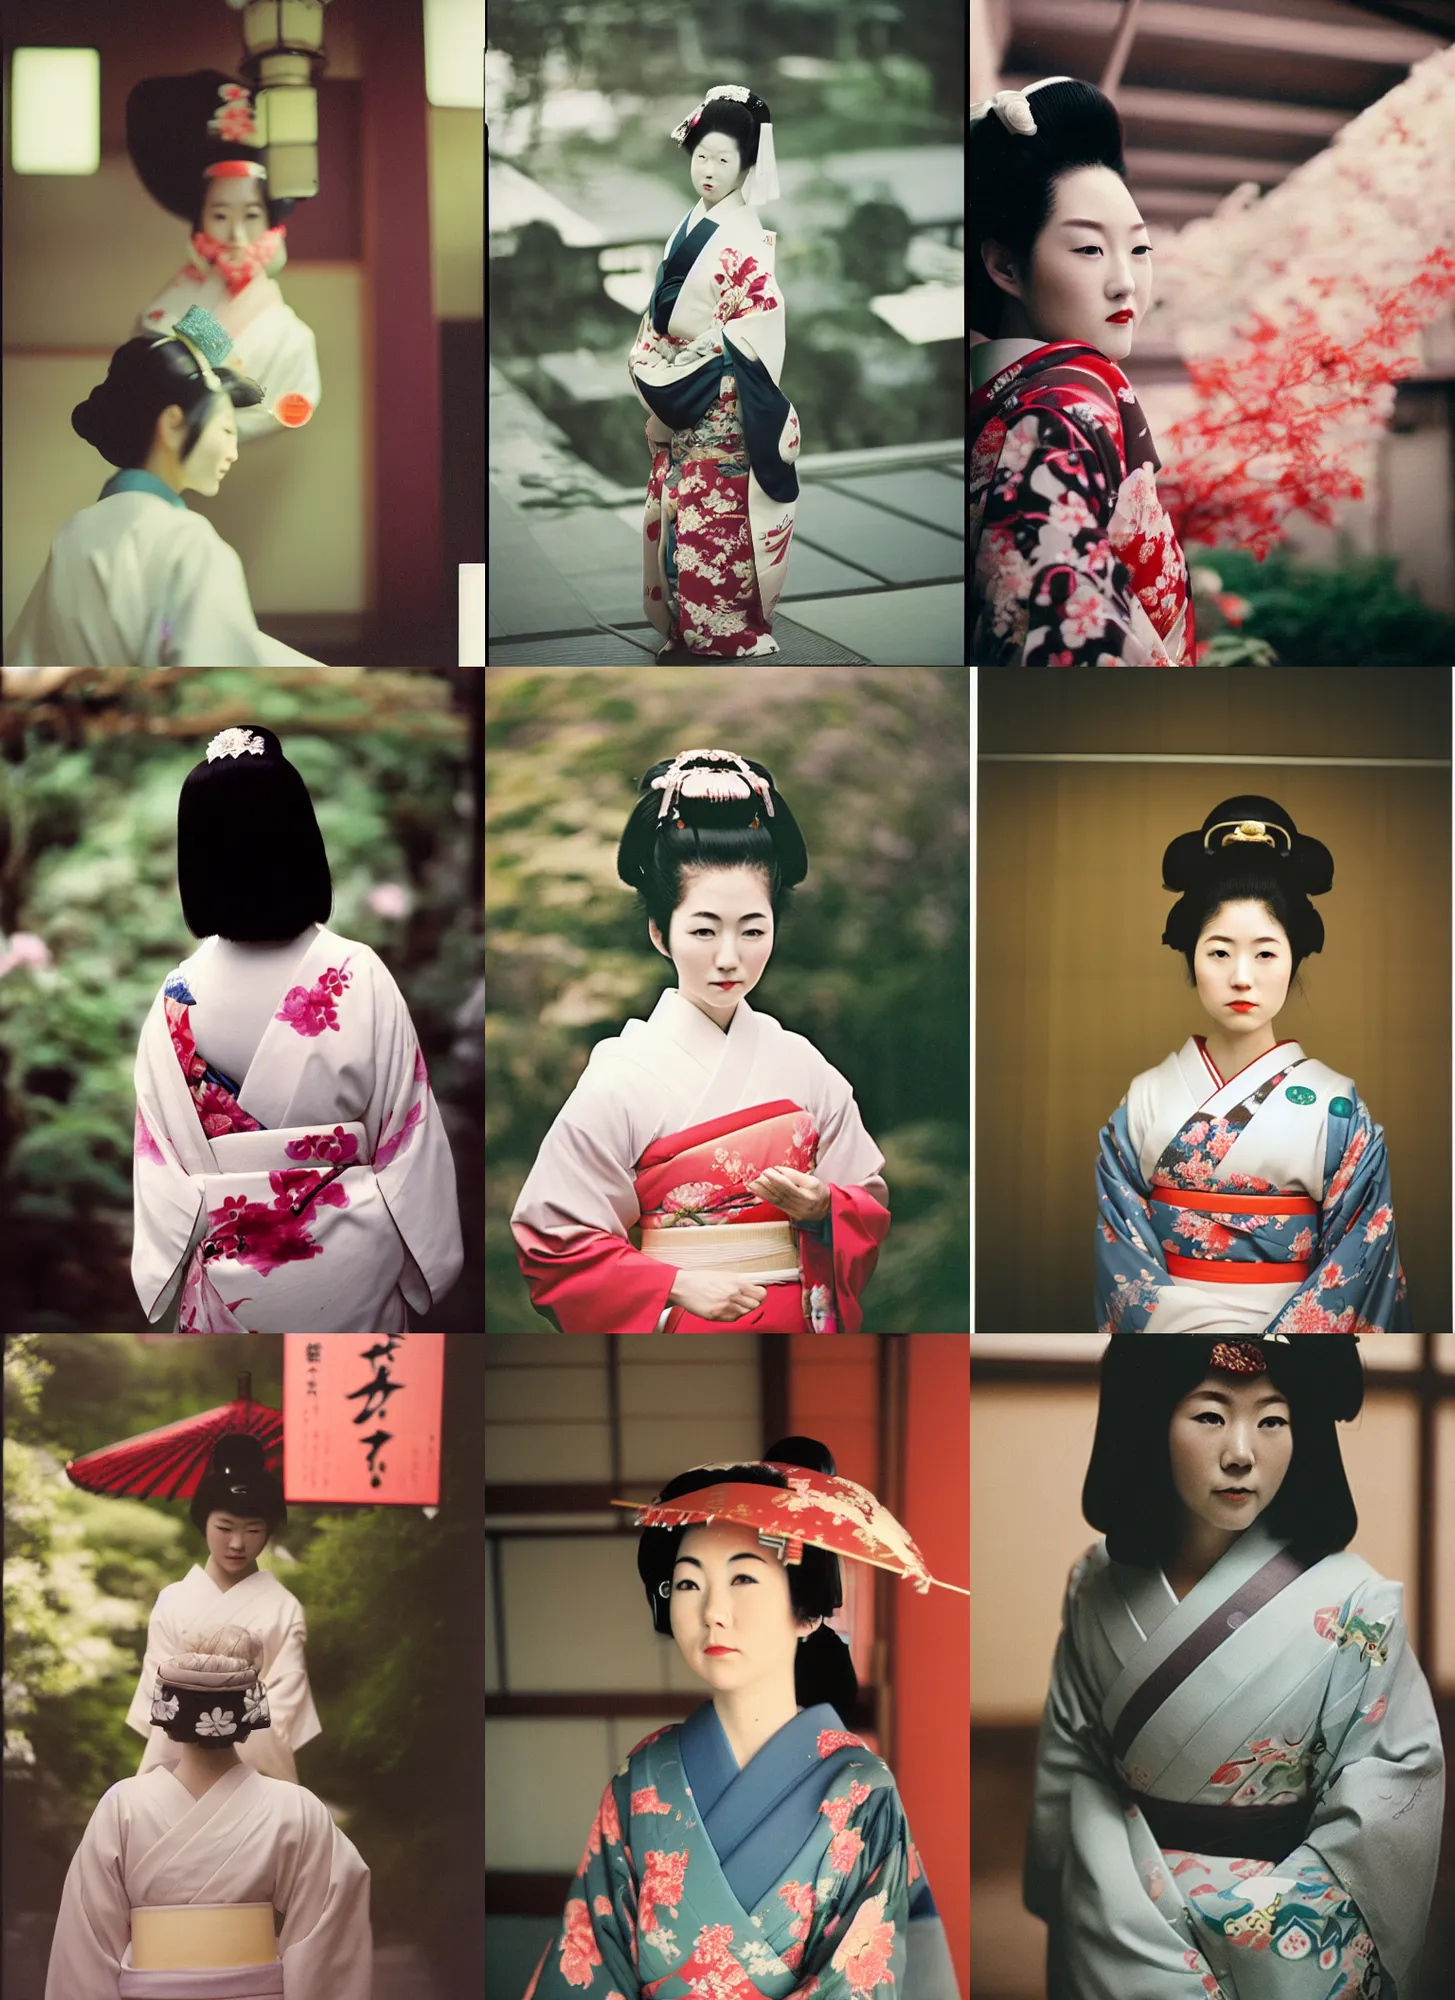 Prompt: Portrait Photograph of a Japanese Geisha Fujicolor Natura 1600